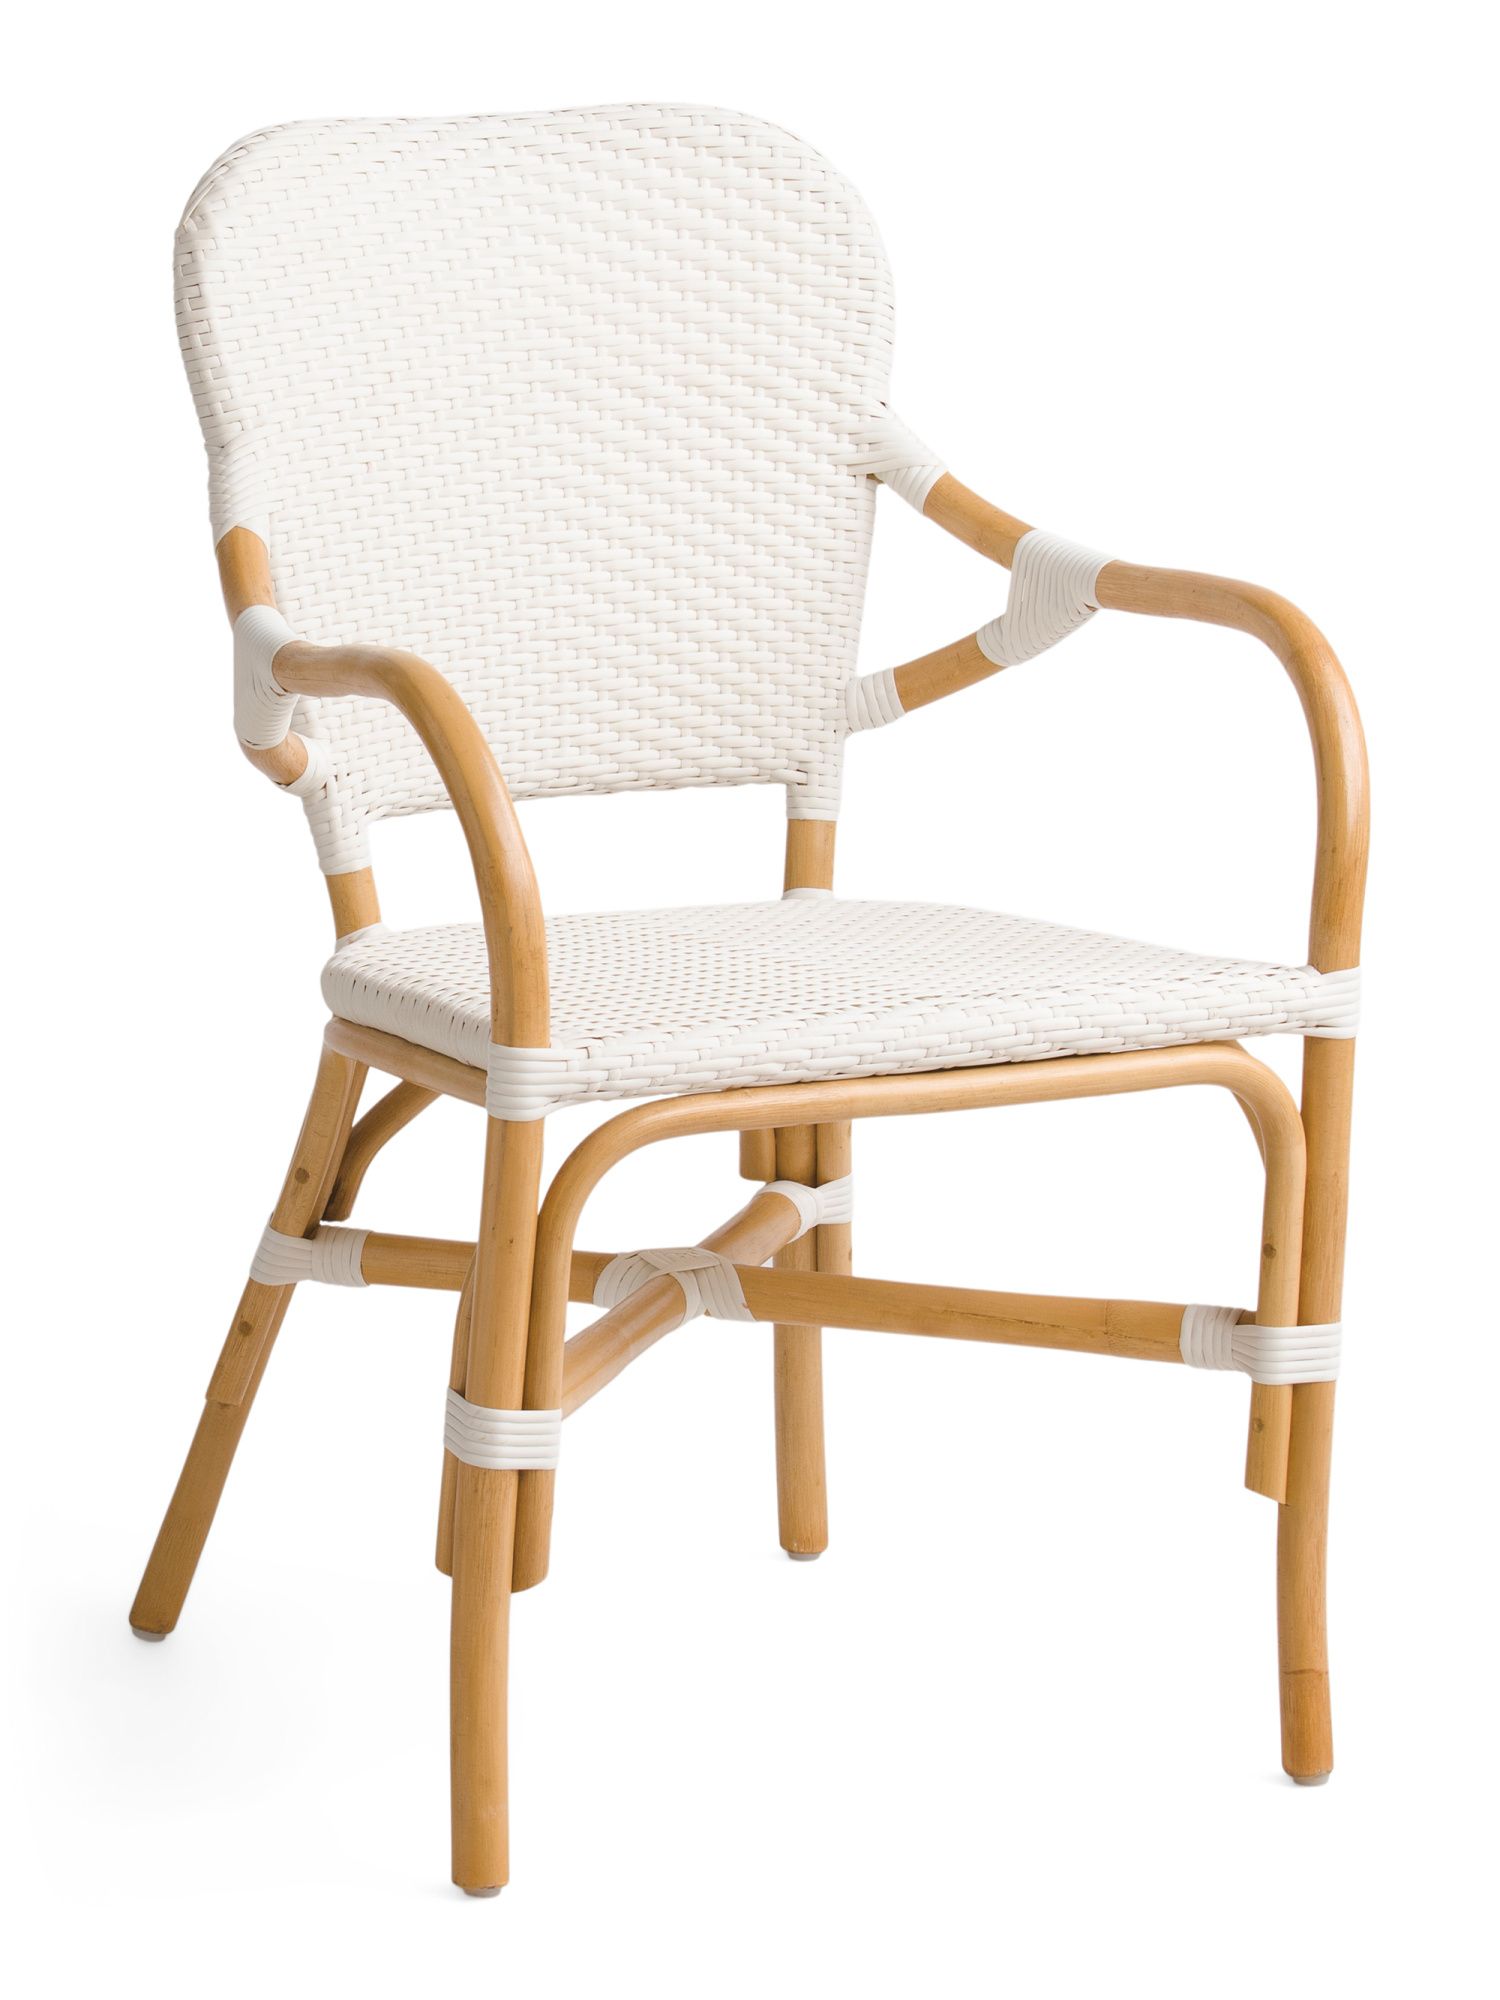 Bistro Chair | Furniture & Lighting | Marshalls | Marshalls